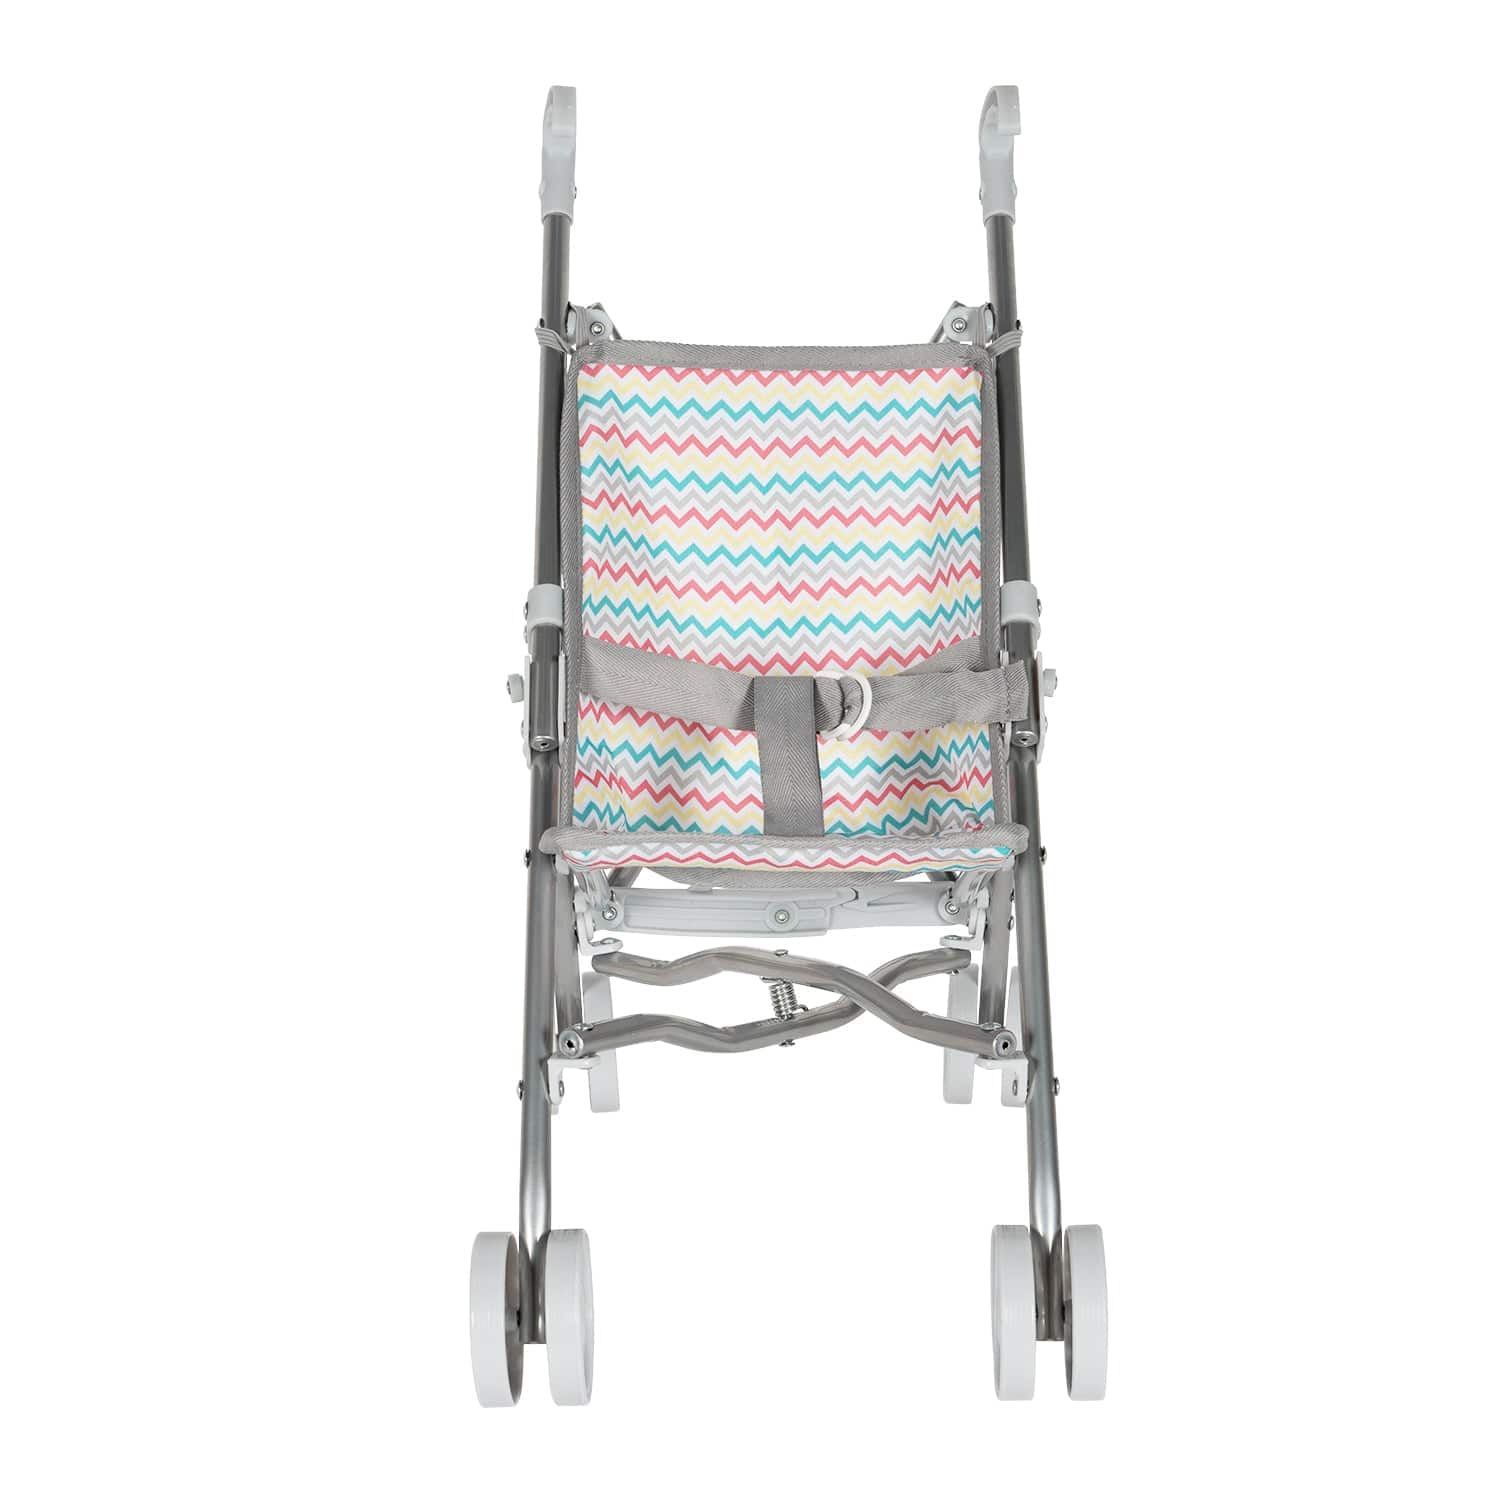 Adora Baby Doll Mini Stroller - Zig Zag Rainbow